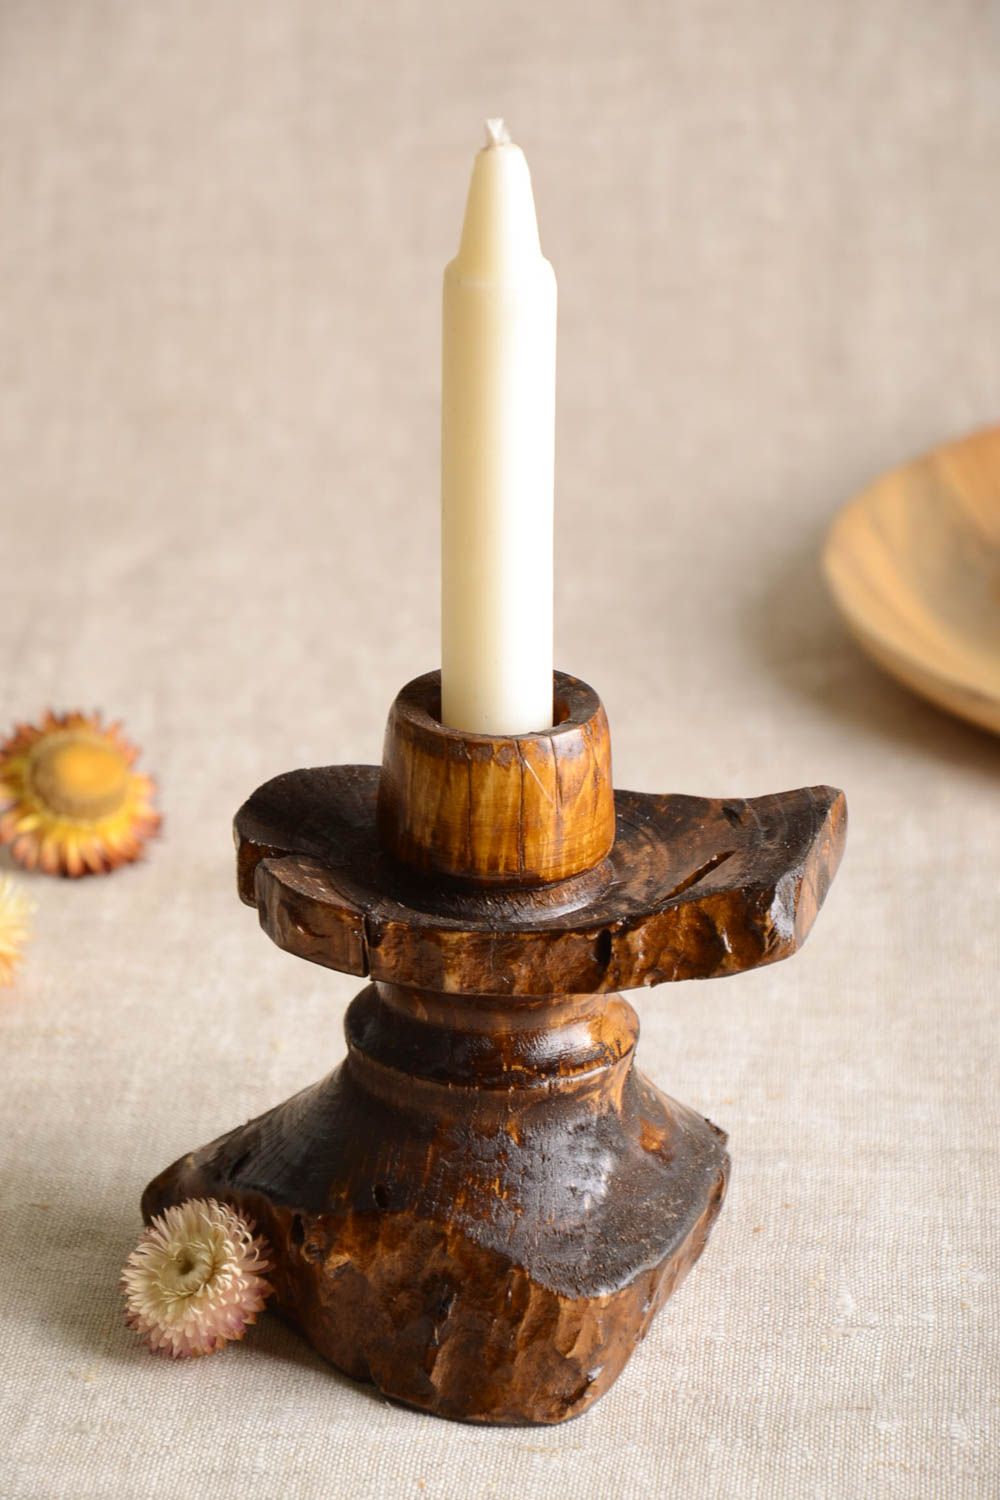 Beautiful handmade wooden candlestick interior decorating wood craft ideas photo 1